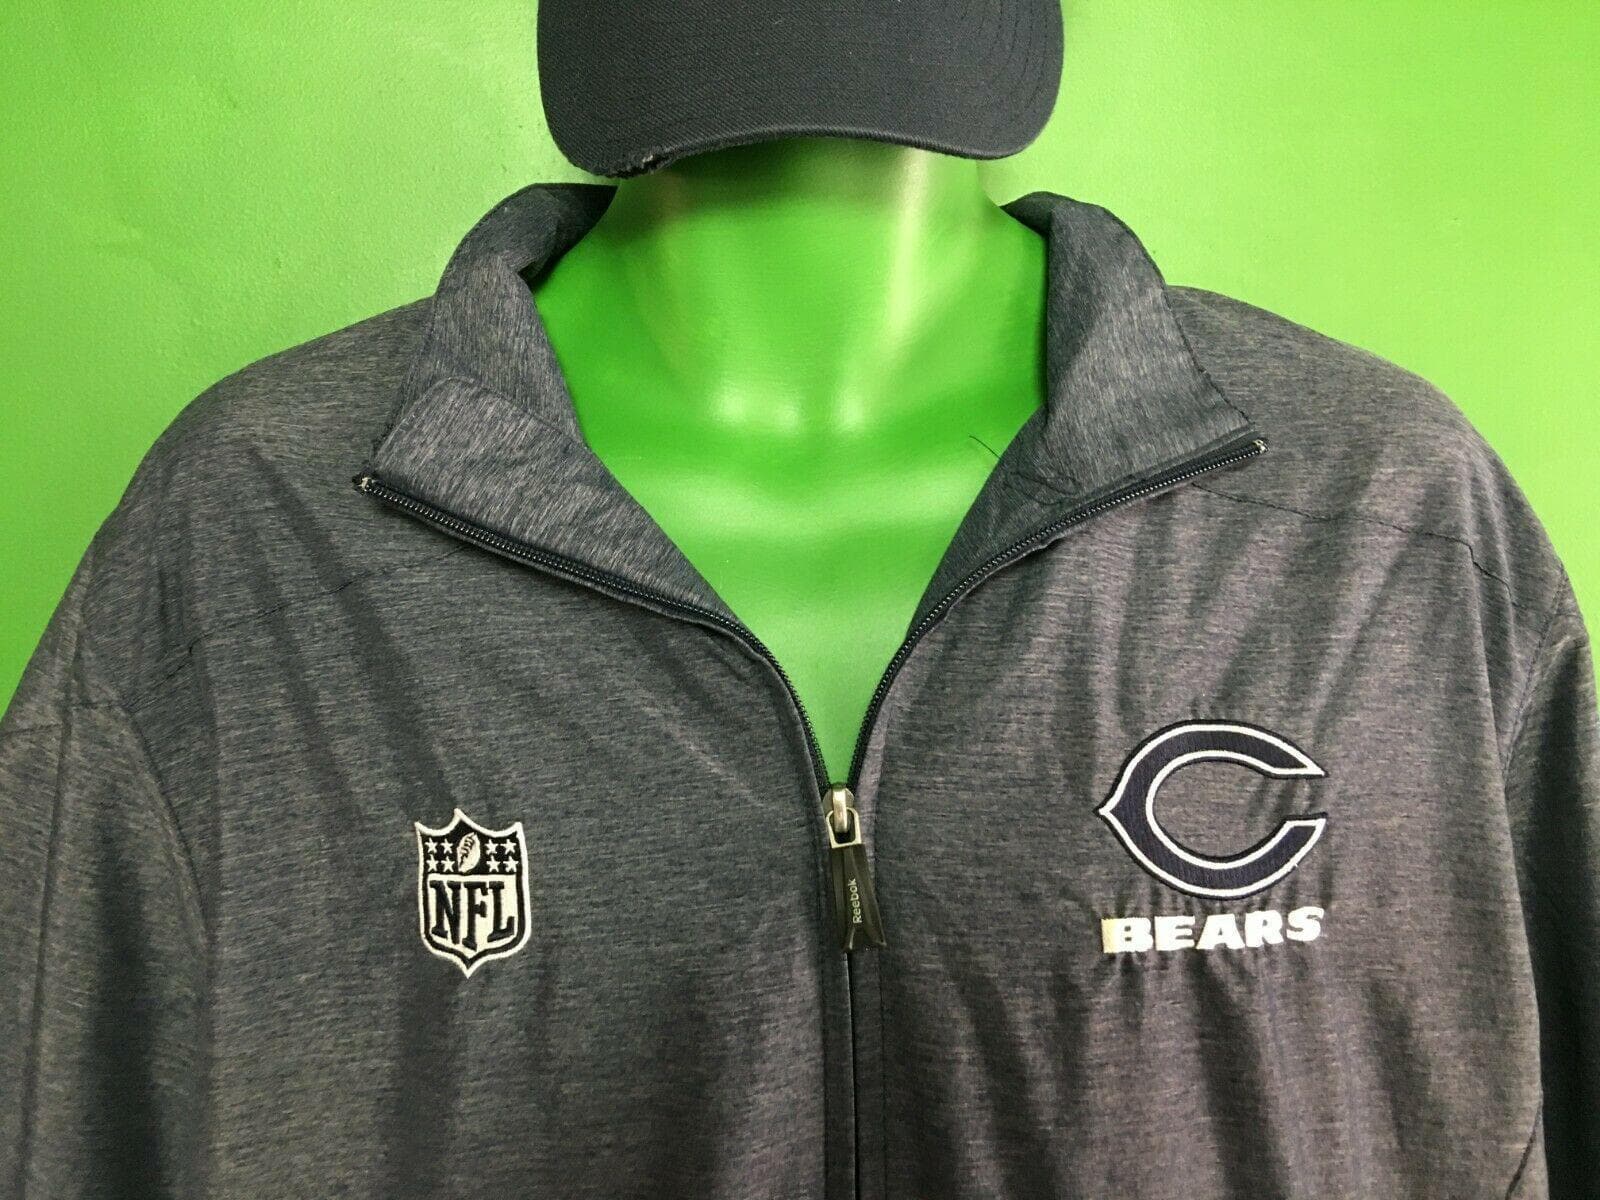 NFL Chicago Bears Monochrome Jacket Men's Large